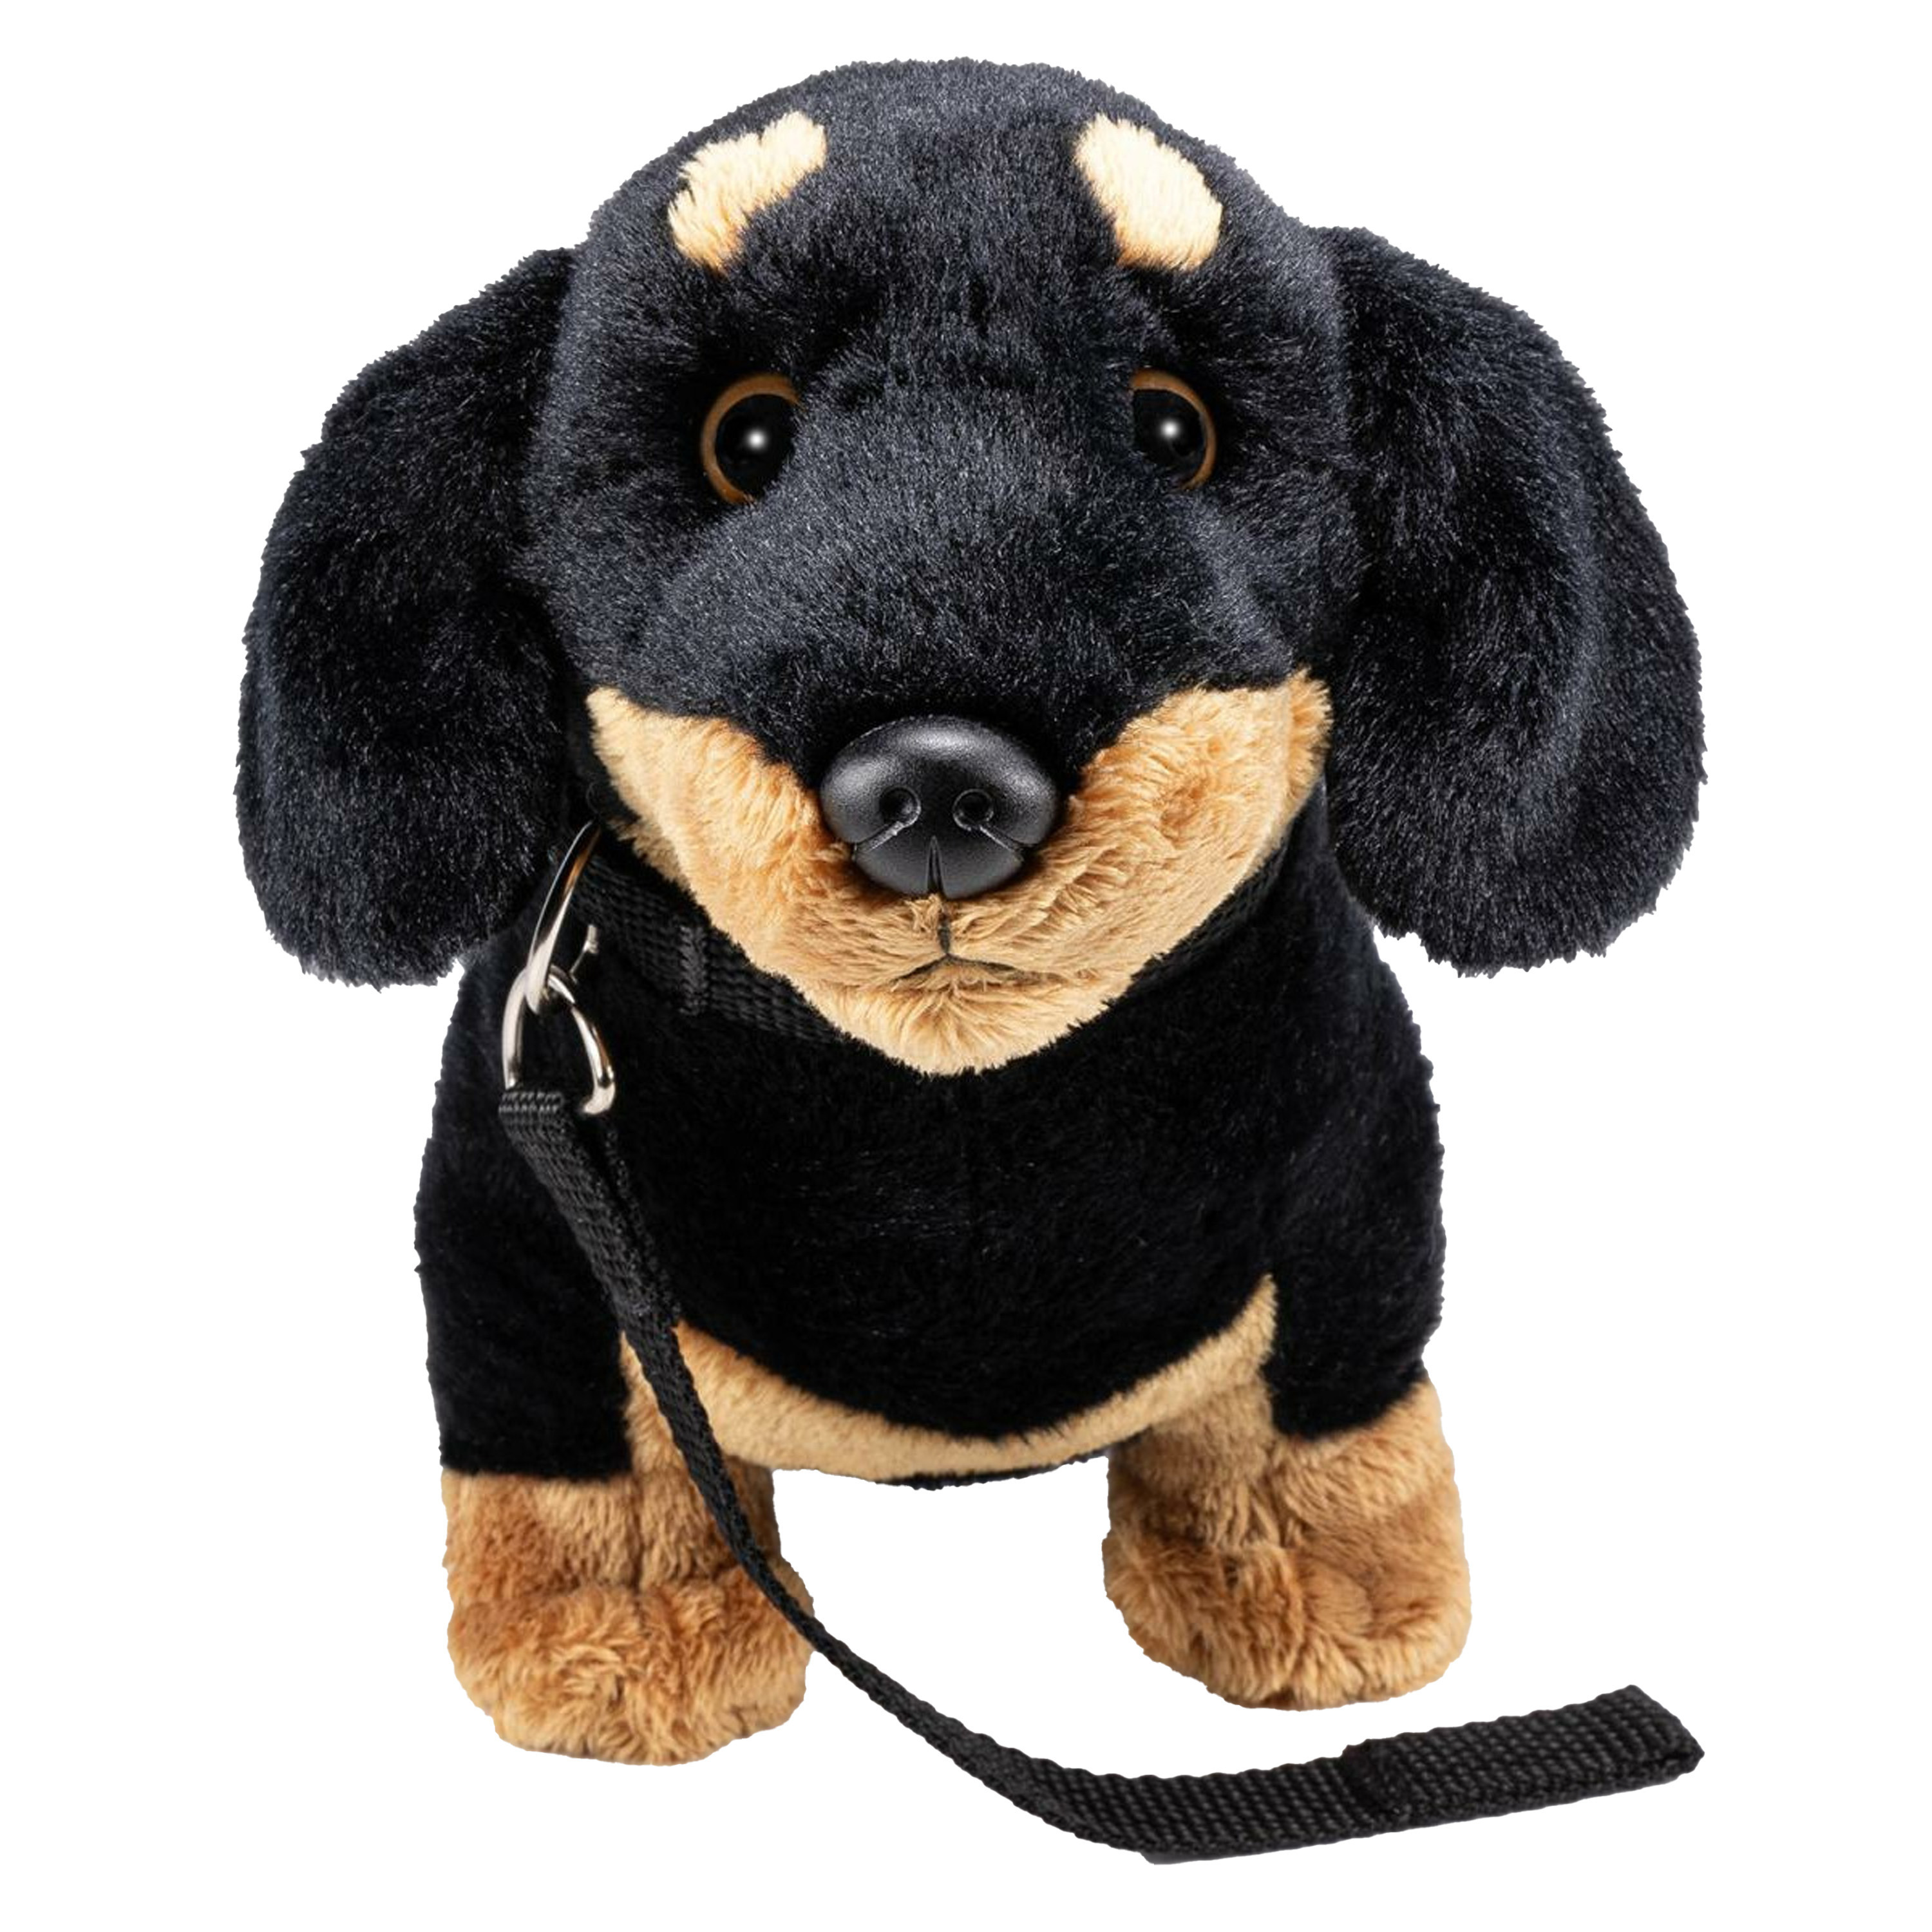 Carl Dick Knuffeldier Teckel hond zachte pluche stof premium kwaliteit knuffels 30 cm